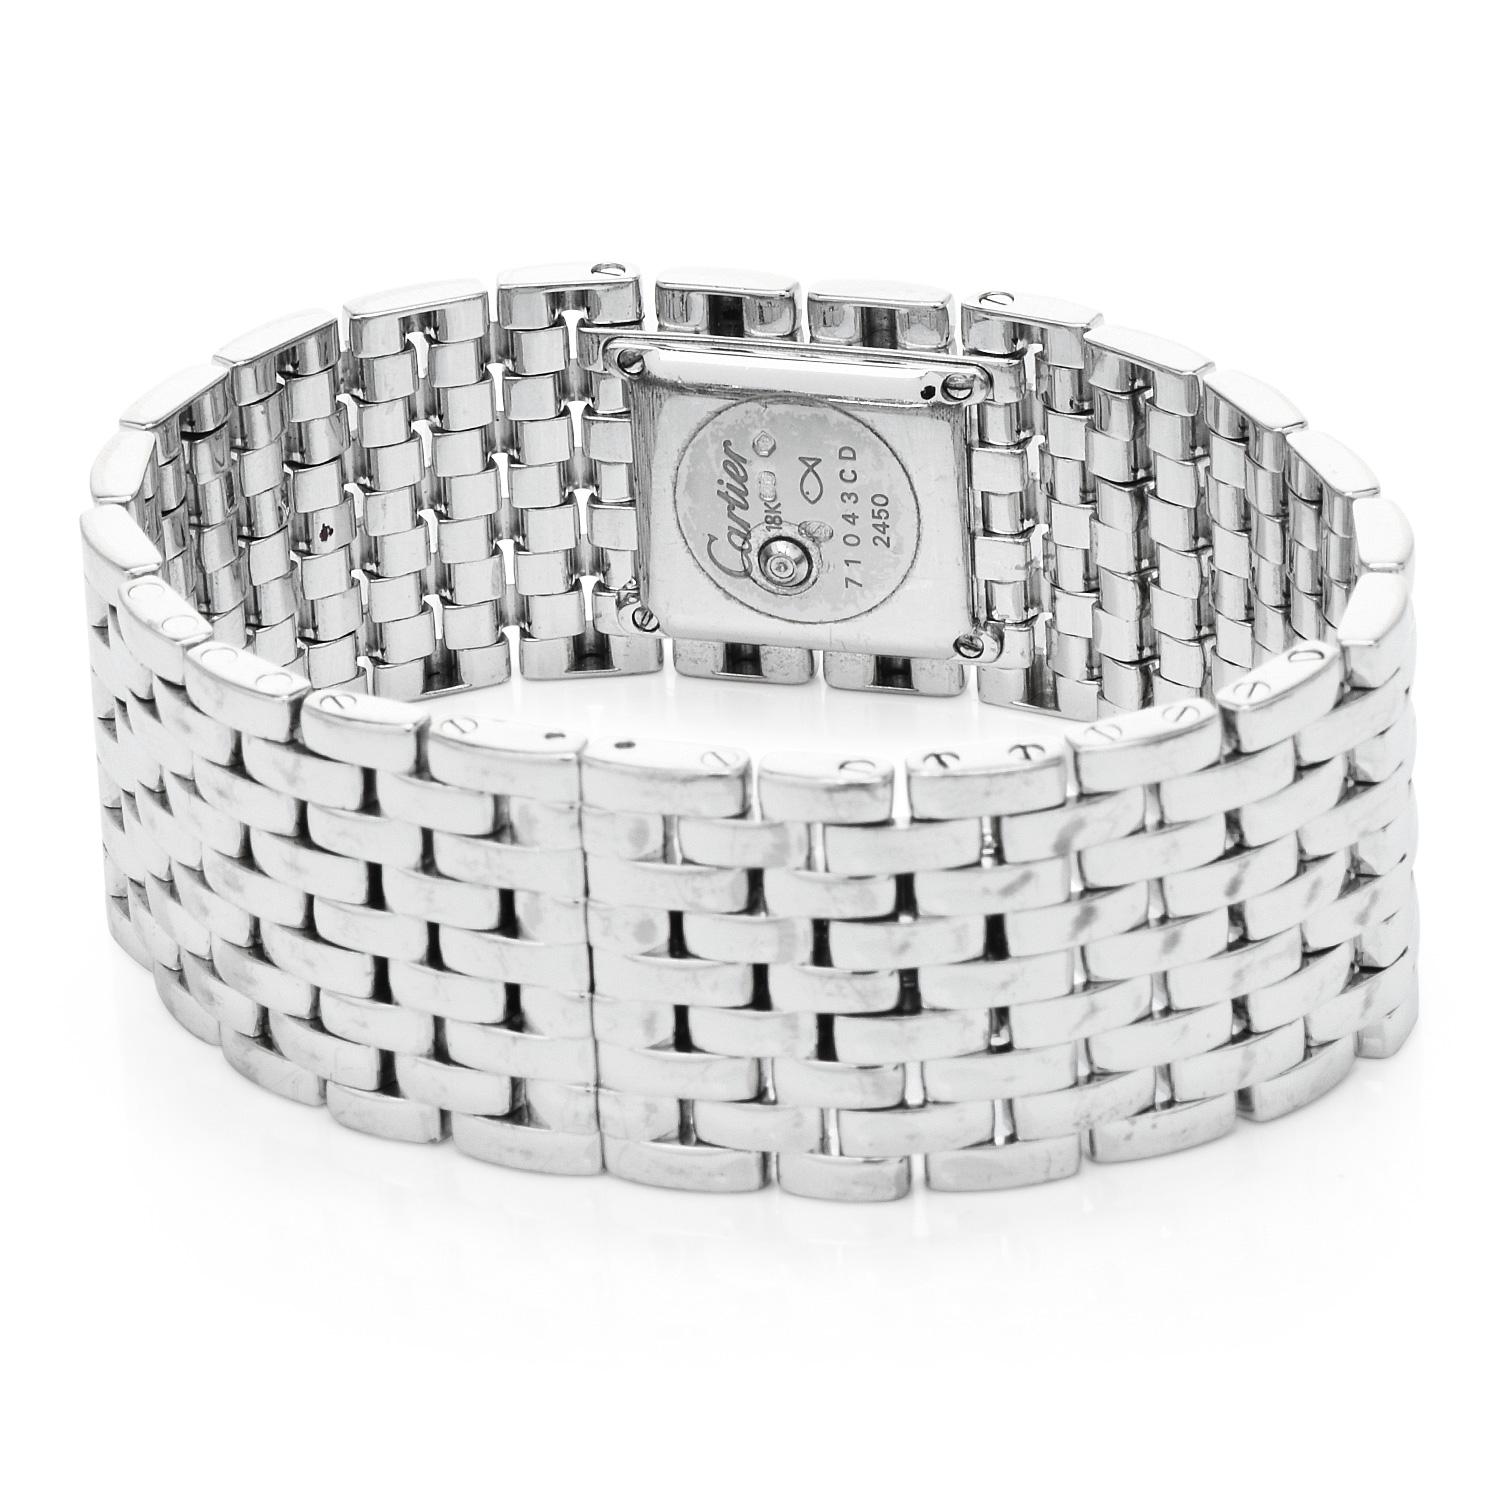 Modern Cartier Panthere Ruban Diamond 18K White Gold Link Ladies Bracelet Watch